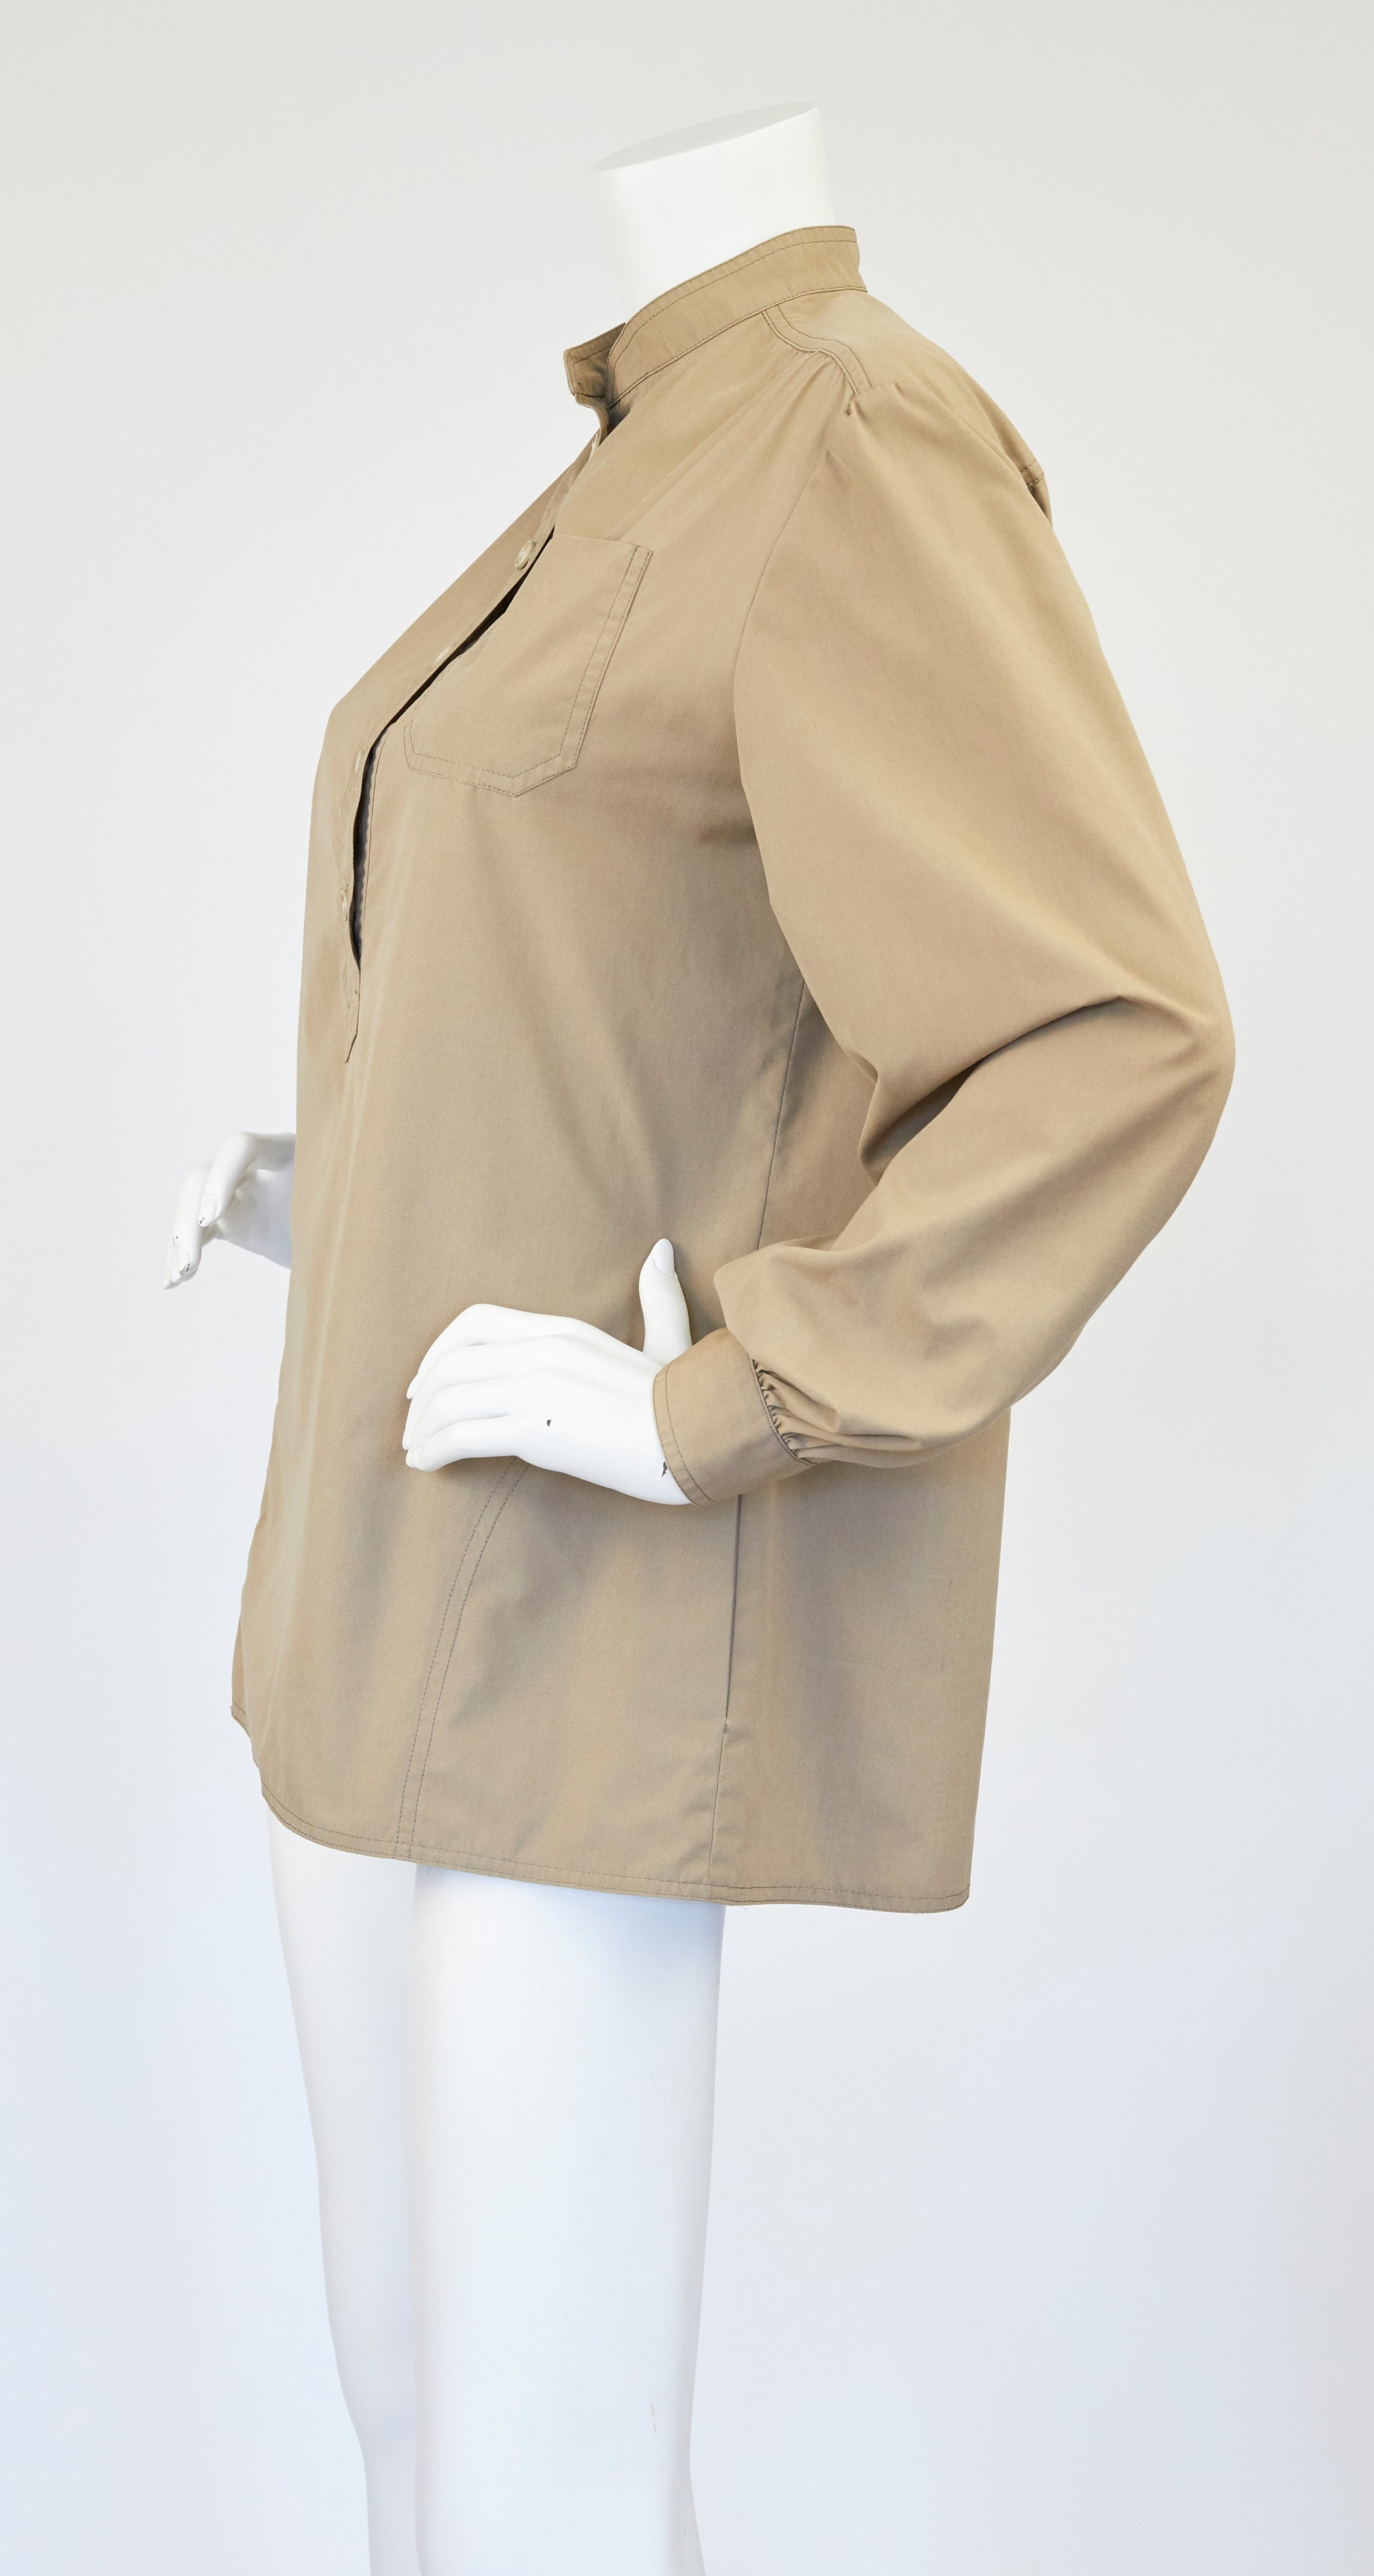 1970s Khaki Safari Style Long Sleeve Tunic